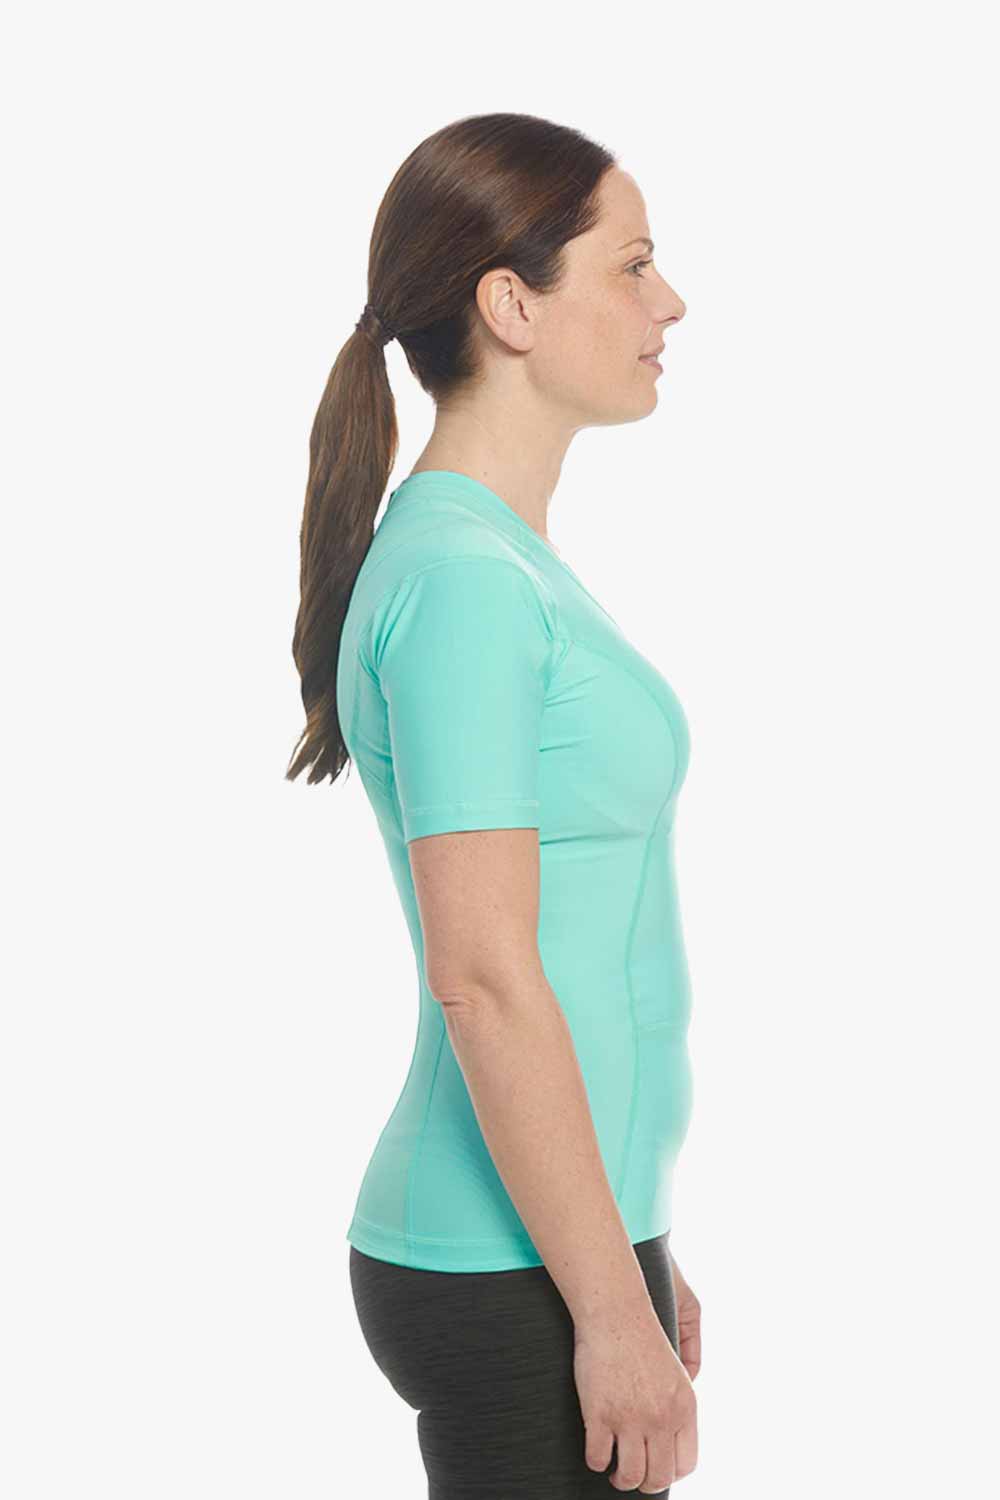 Women's Posture Shirt™ - Mint